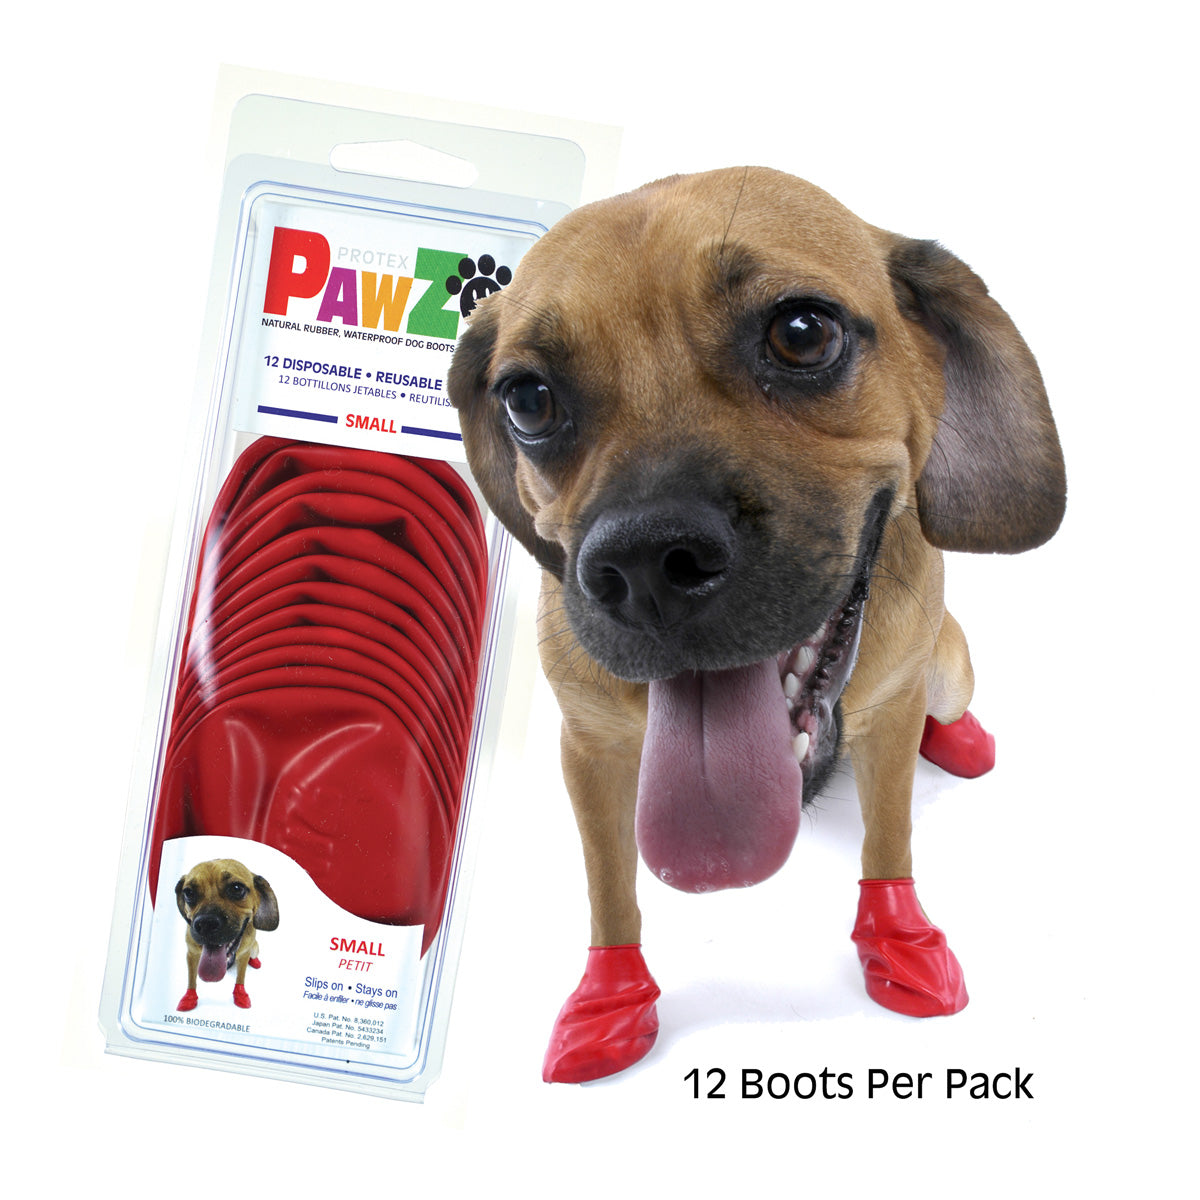 Pawz bottes Small Bottes pour chien Pawz Rubber Balloon